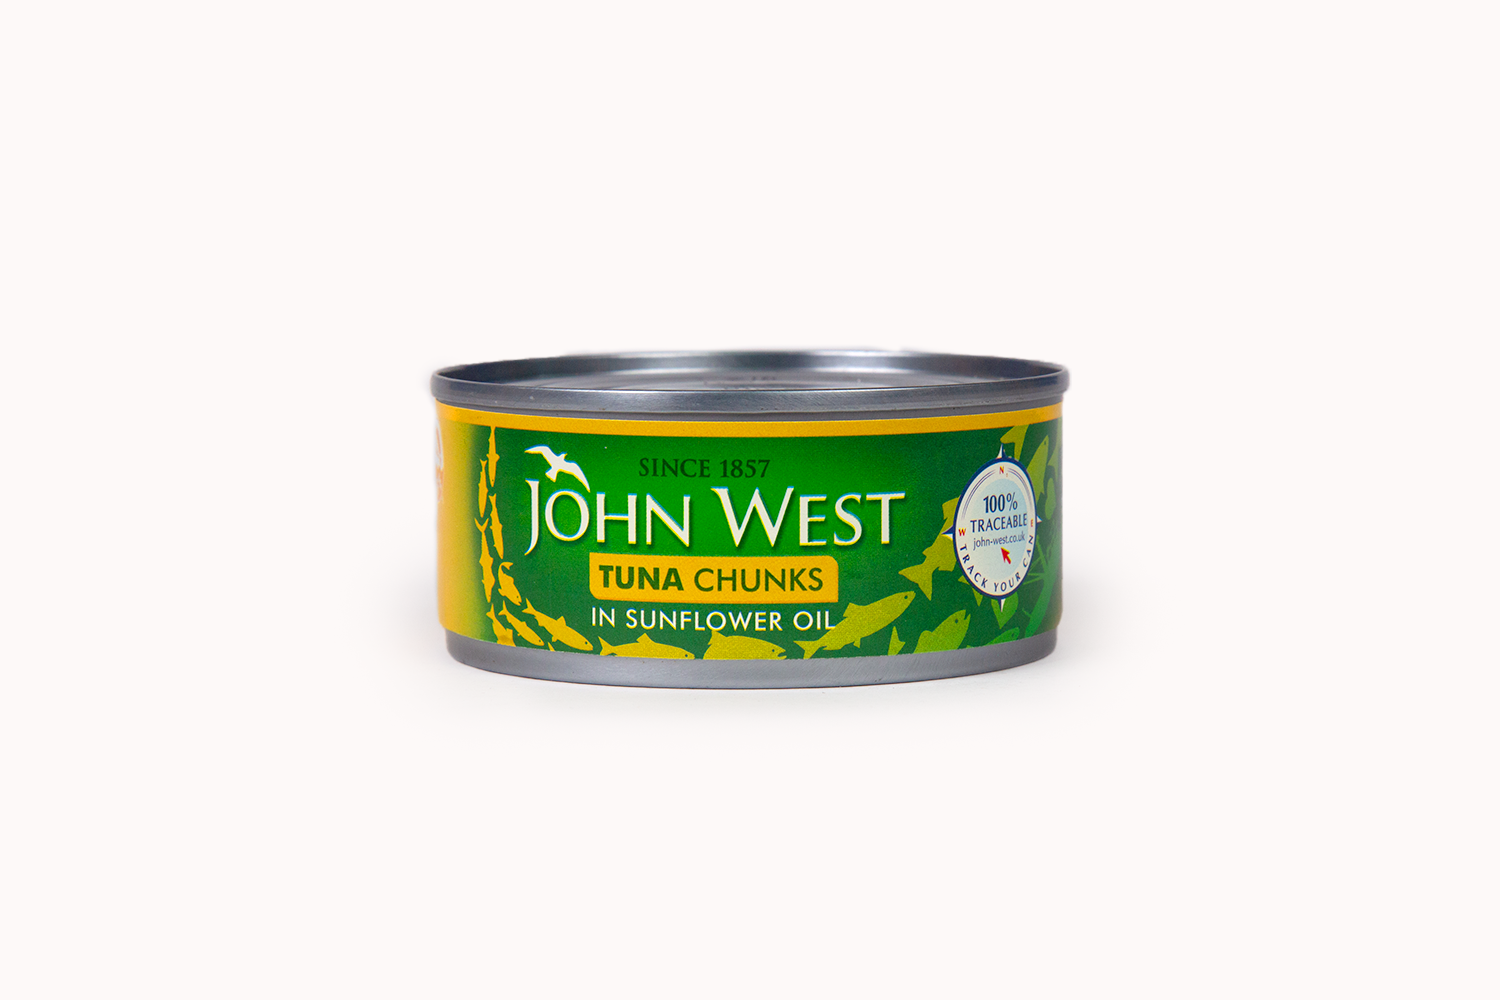 John West Tuna Chunks in Sunflower Oil